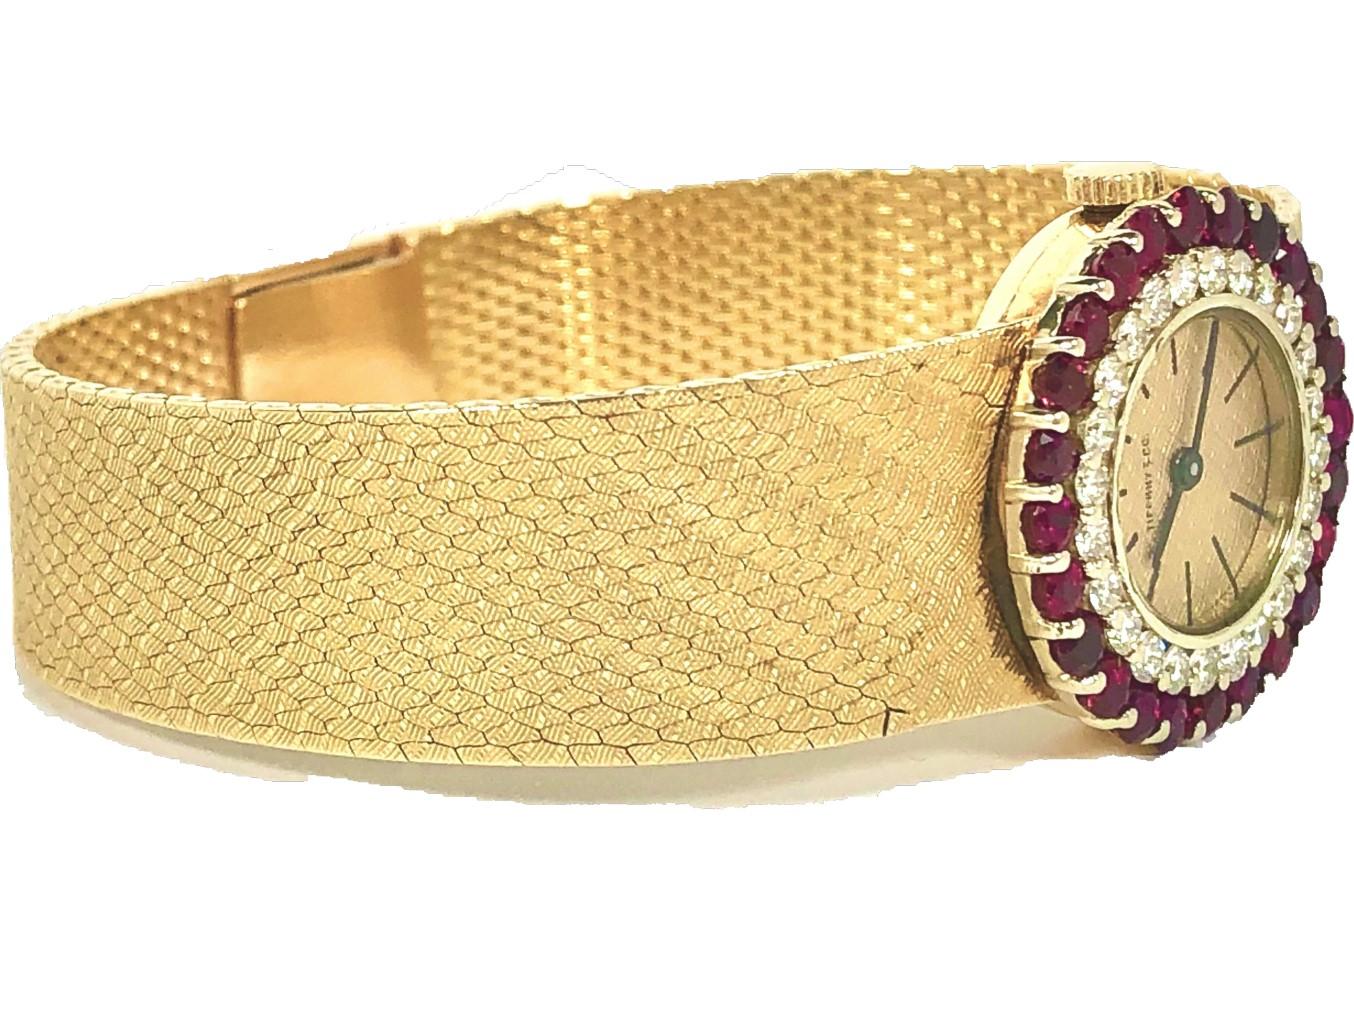 Tiffany & Co. Gold Double Bezel Watch with One Diamond Bezel and One Ruby Bezel 3